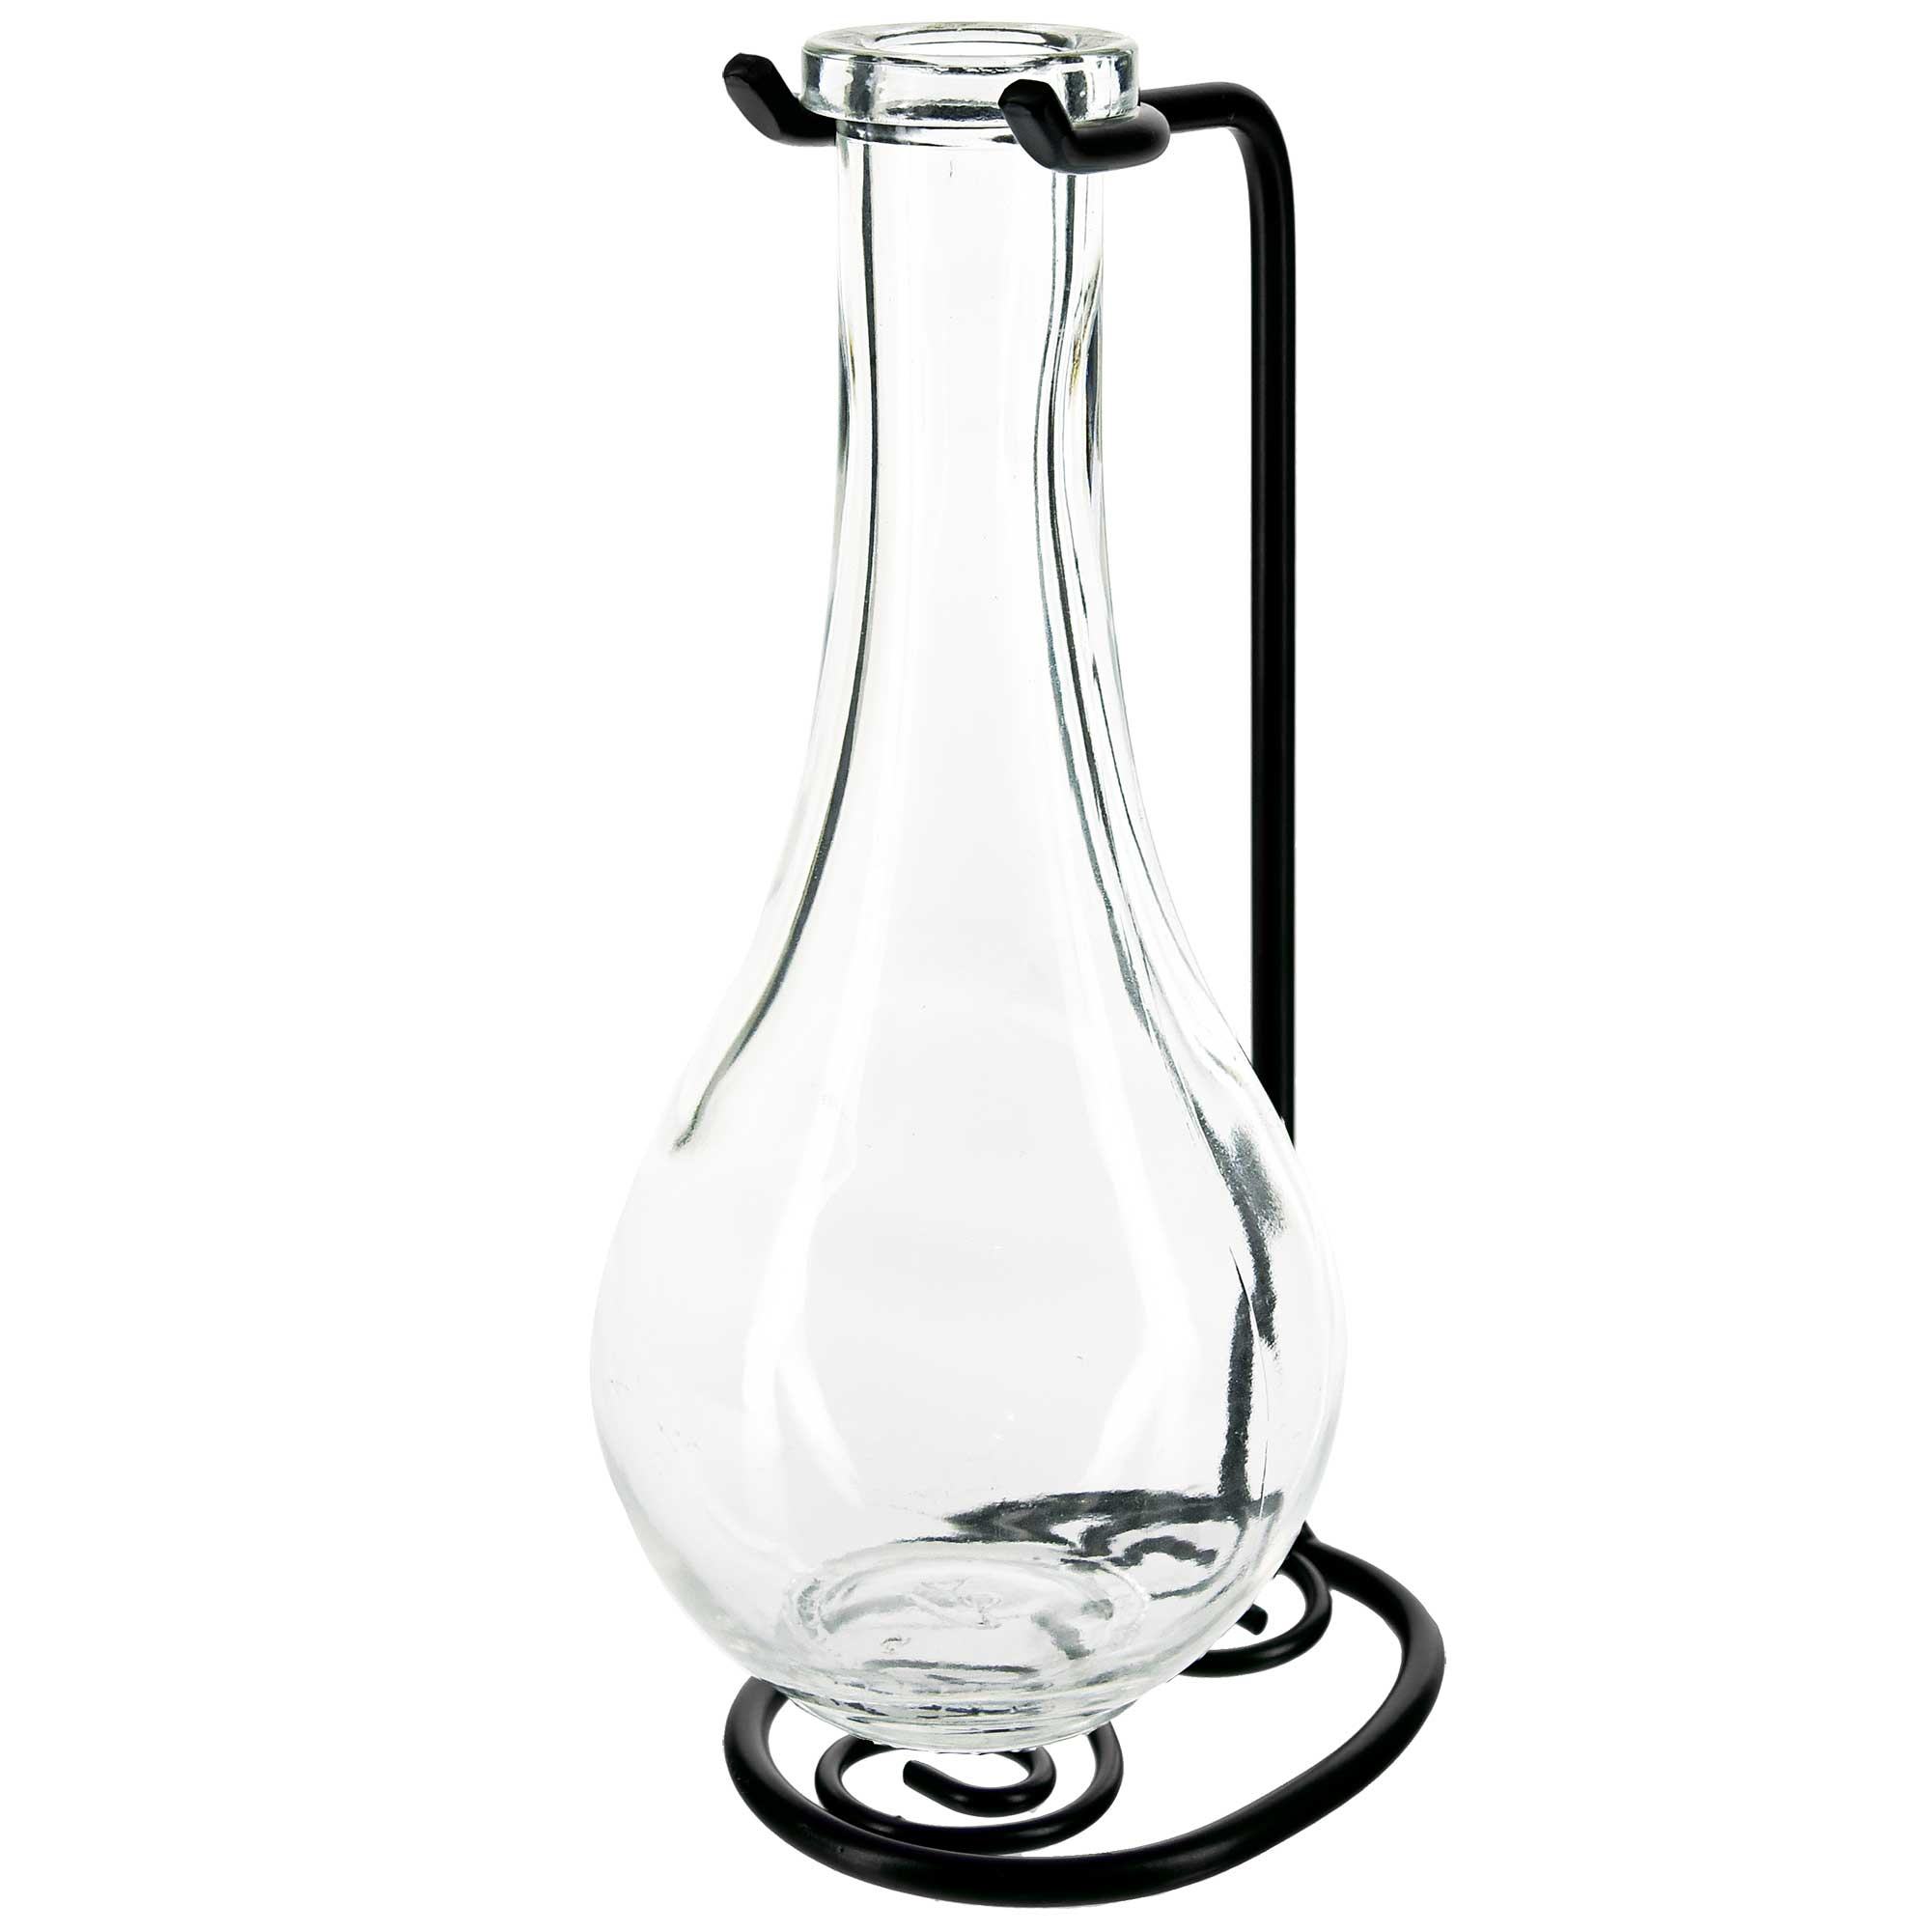 Drop Recycled Glass Vase & Metal Stand - Aqua